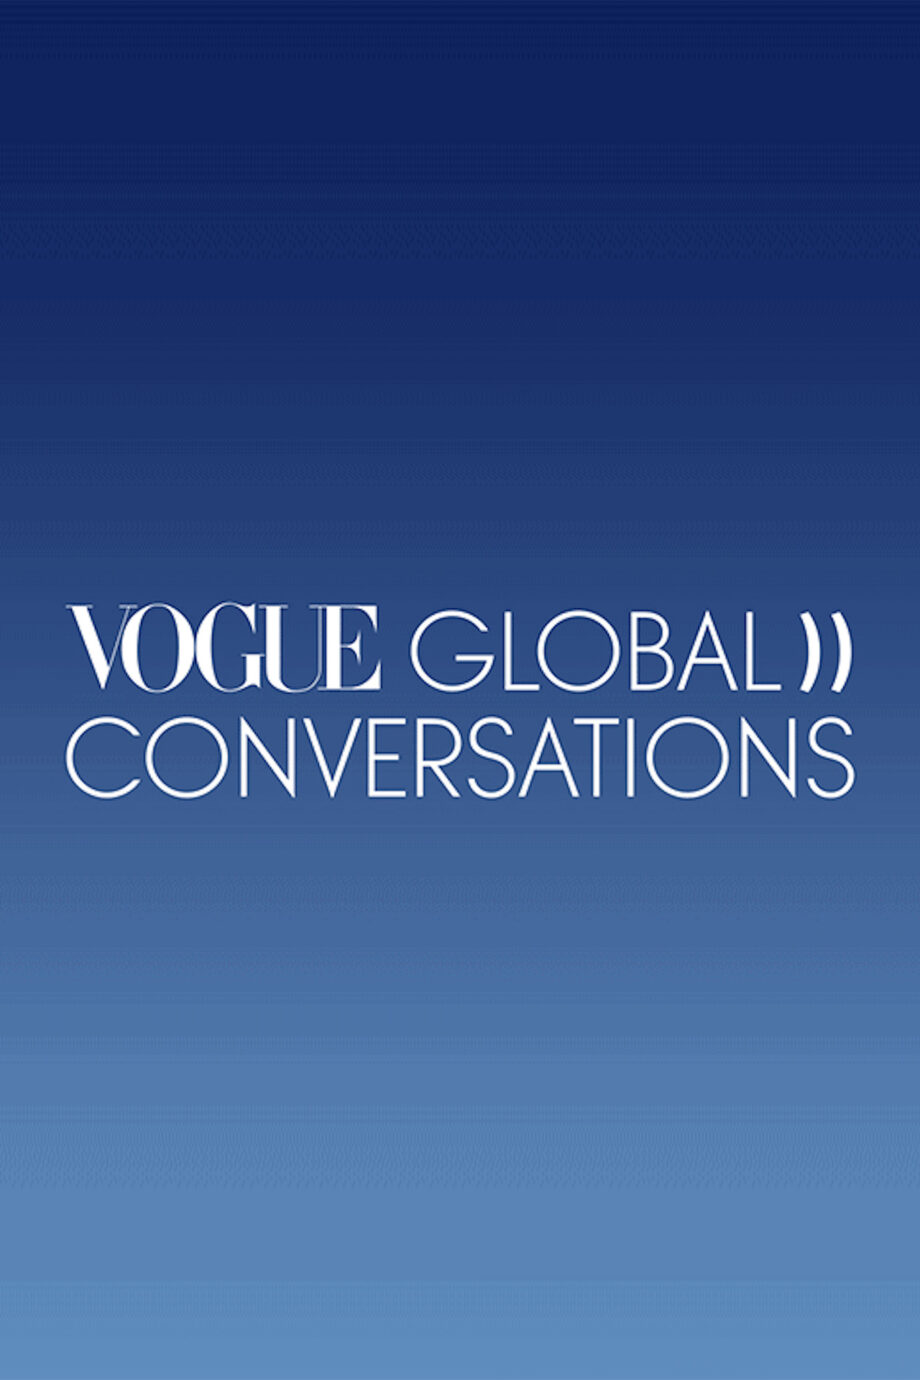 to-vogue-global-conversations-επιστρέφει-τον-μάιο-141808